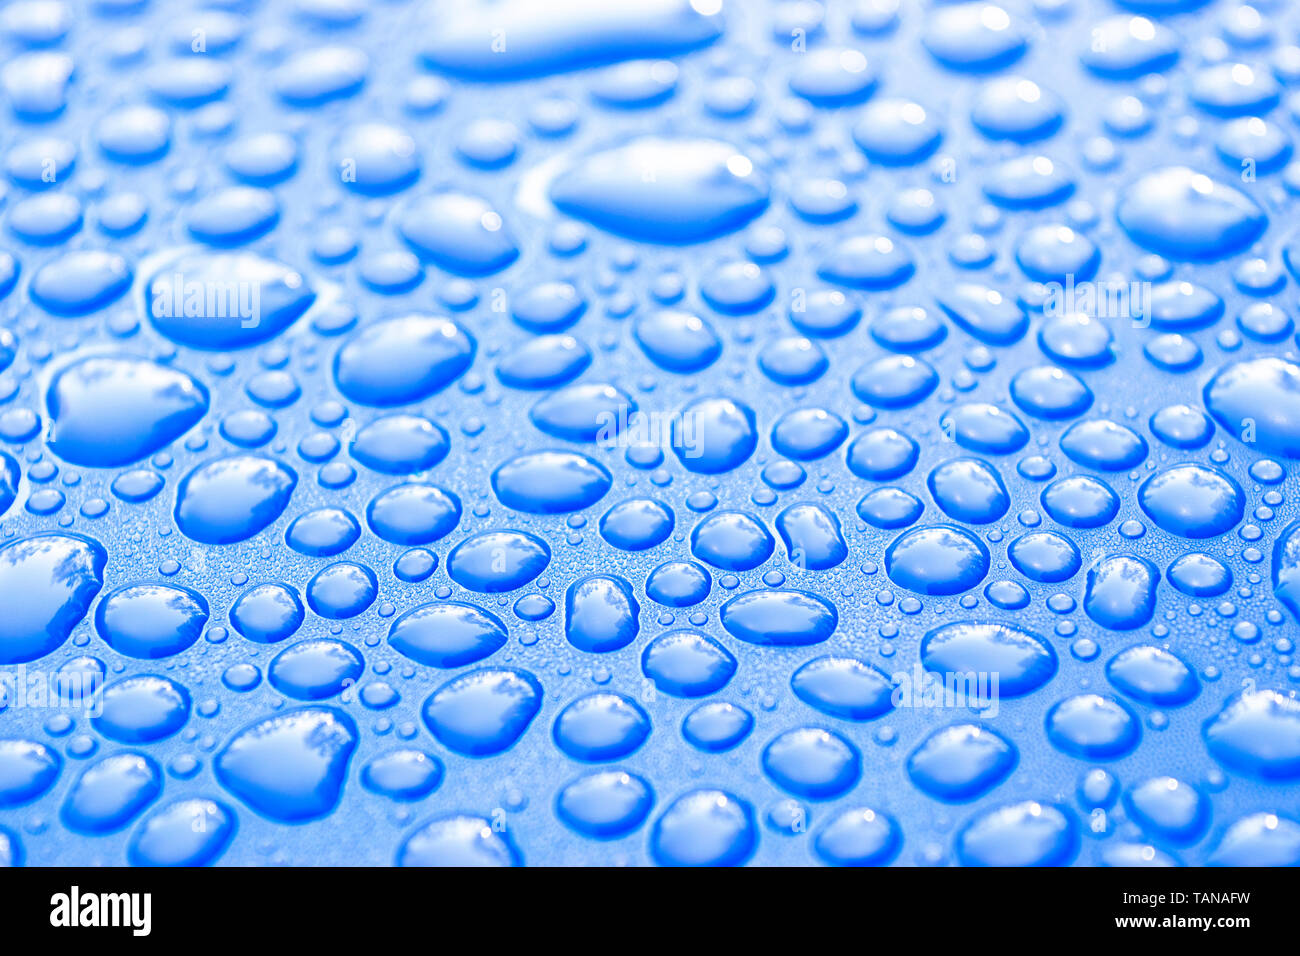 Transparent Still Water Drops On Light Blue Background Blue Water Drops Drops Of Rain On Glass Blue Abstract Water Drop Background Water Surface Stock Photo Alamy